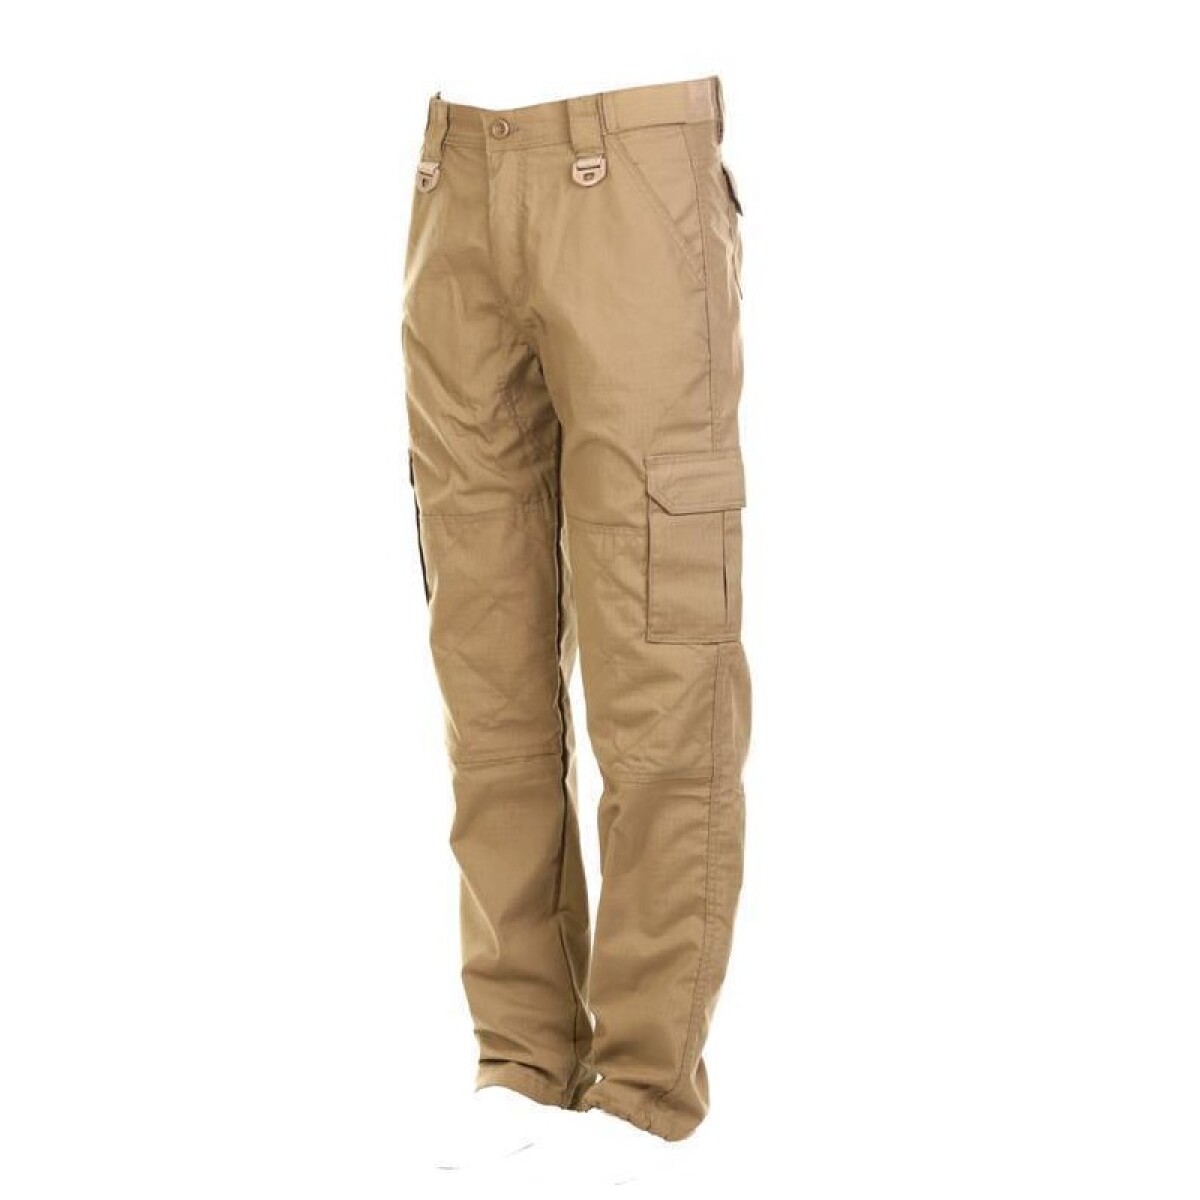 Pantalón táctico 7 bolsillos con puño ajustable - Caqui 